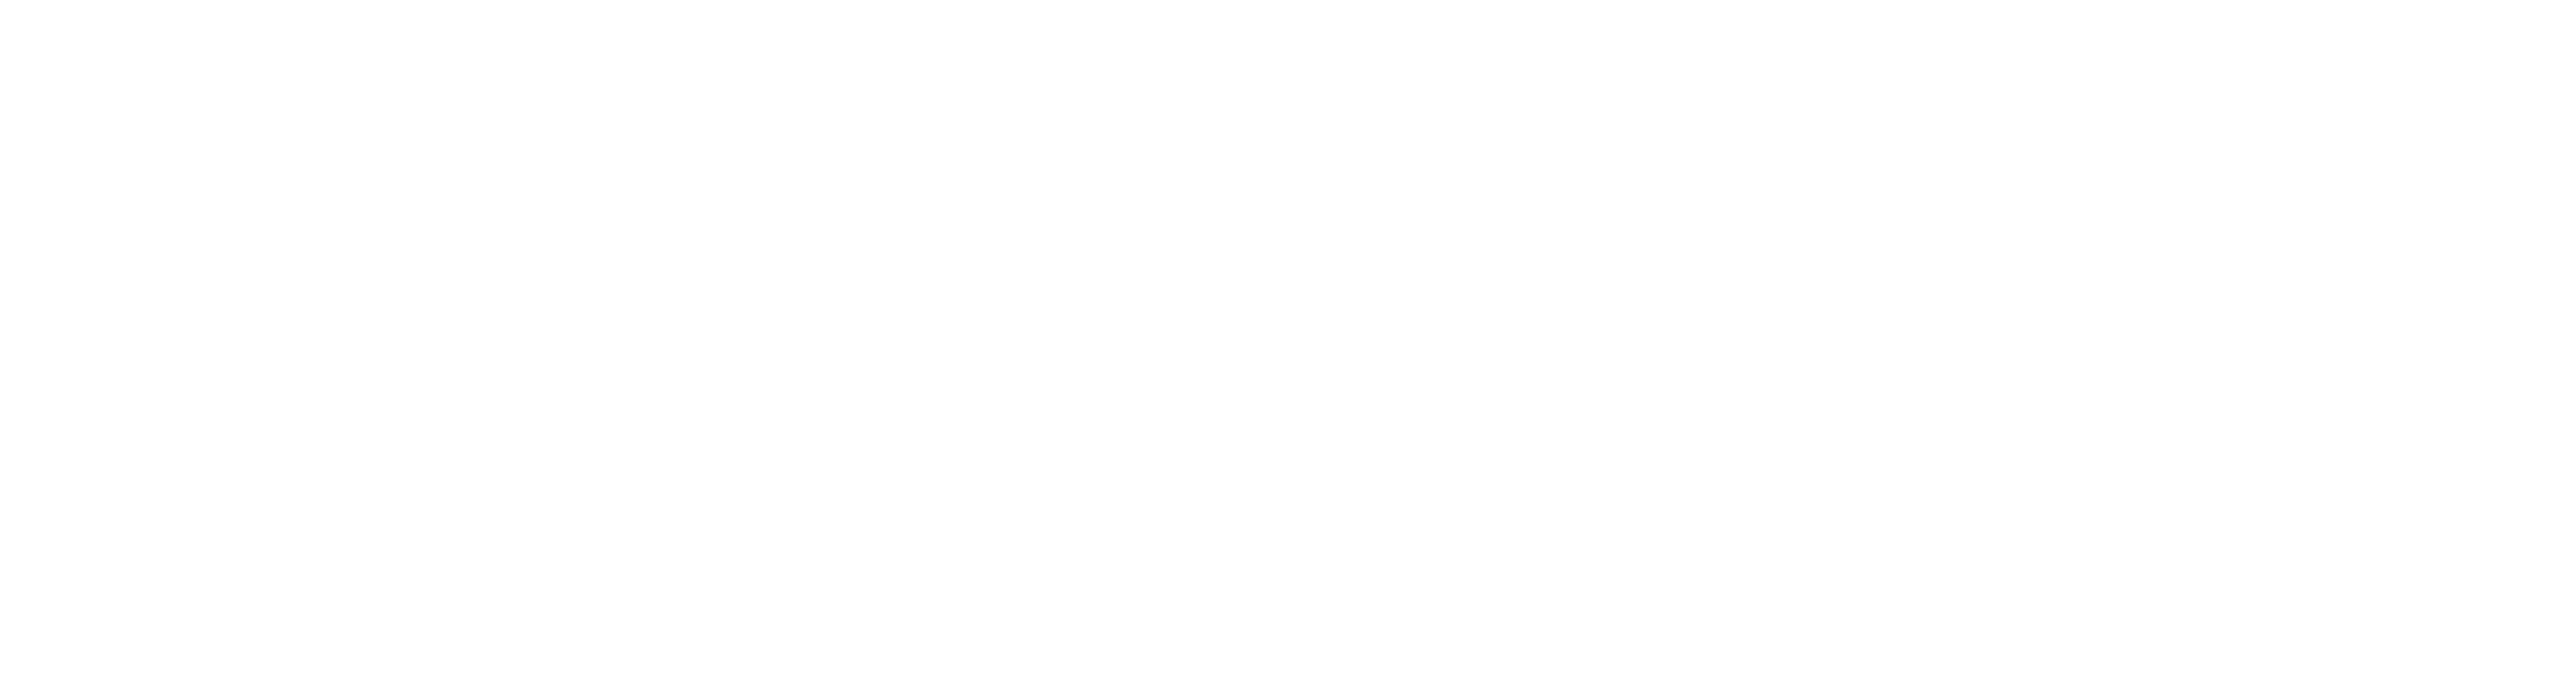 Logotipo Next Generation EU